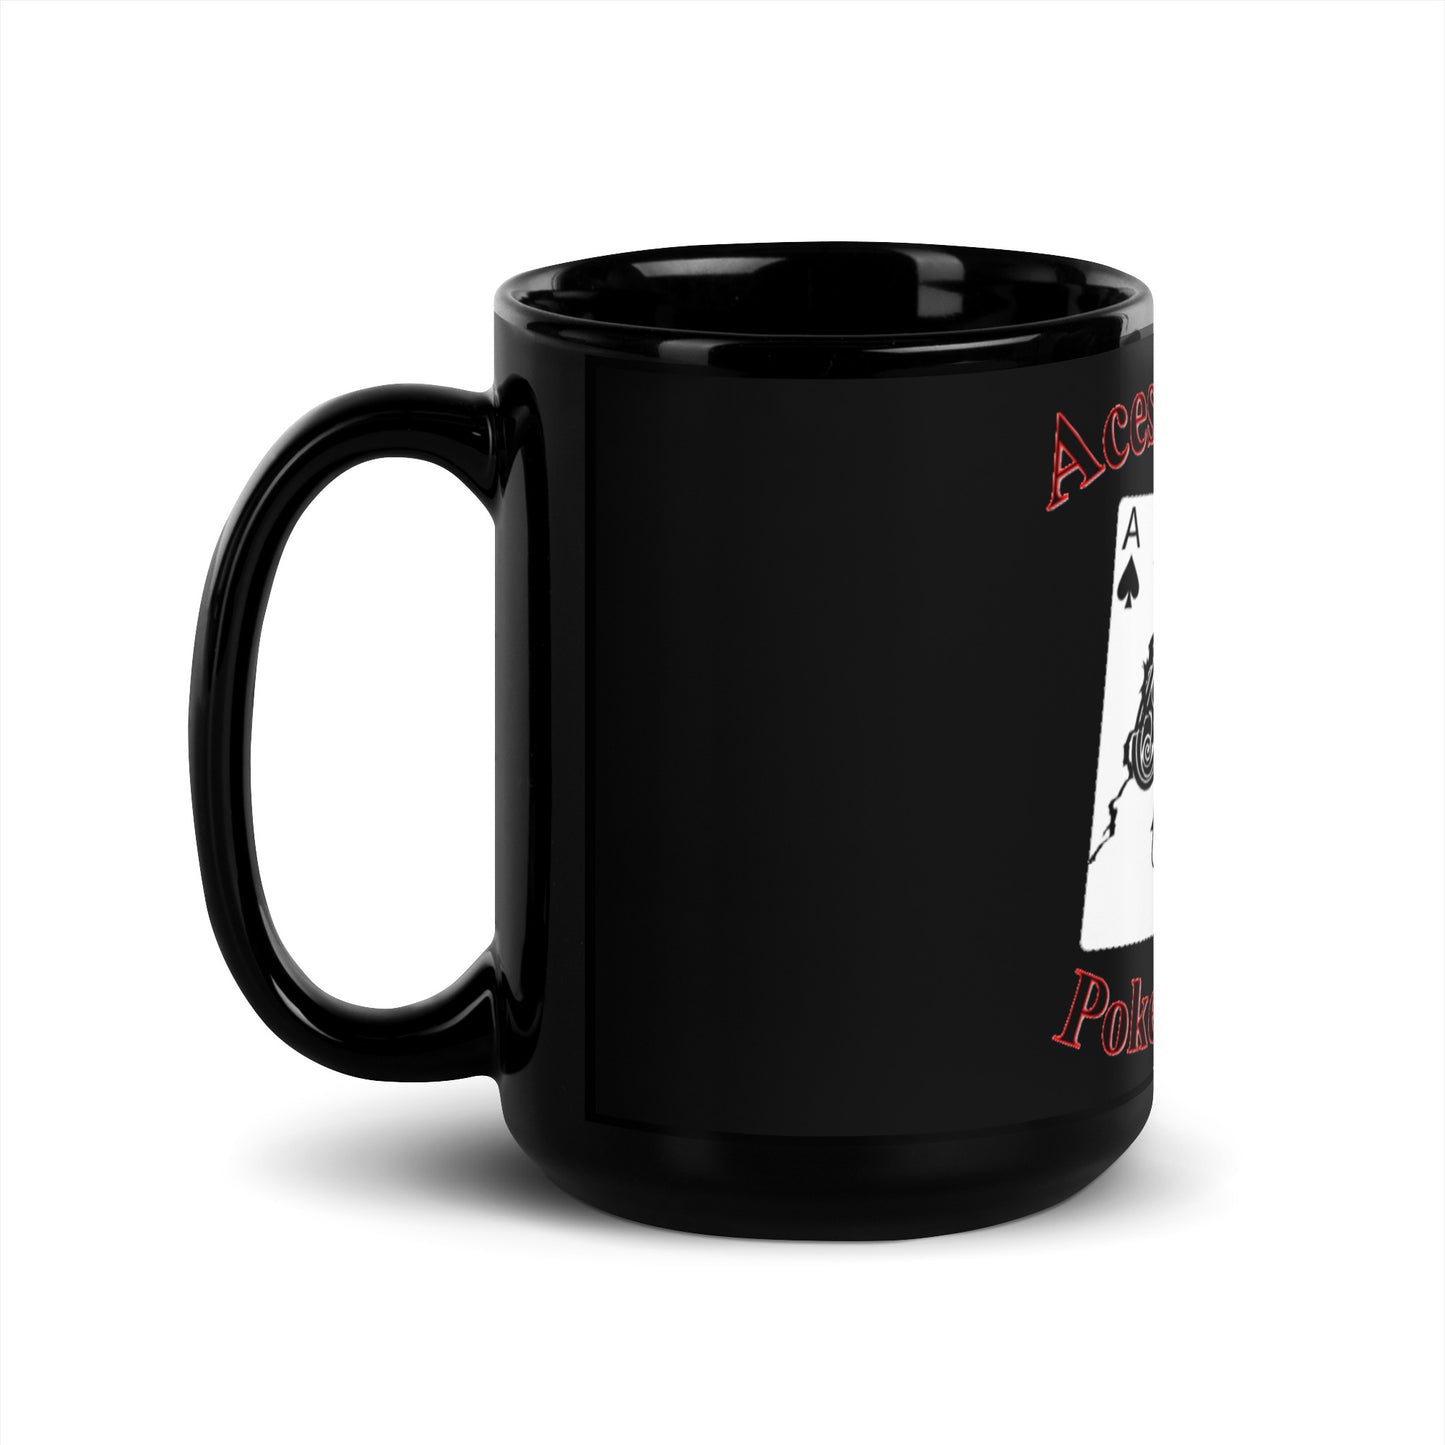 Aces Cracked Coffee Mug